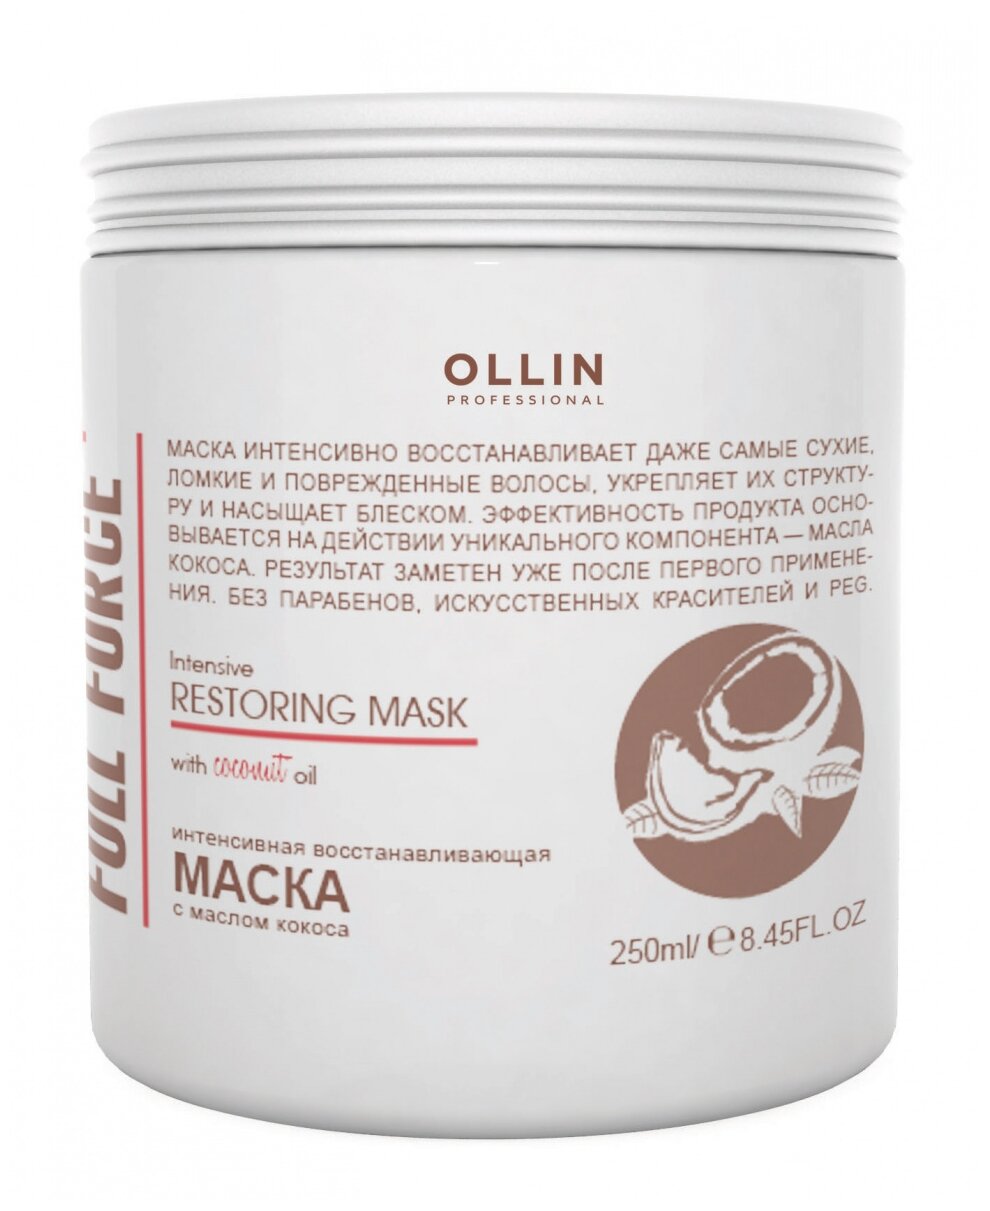 OLLIN Professional Full Force Интенсивная восстанавливающая маска с маслом кокоса, 250 мл, банка